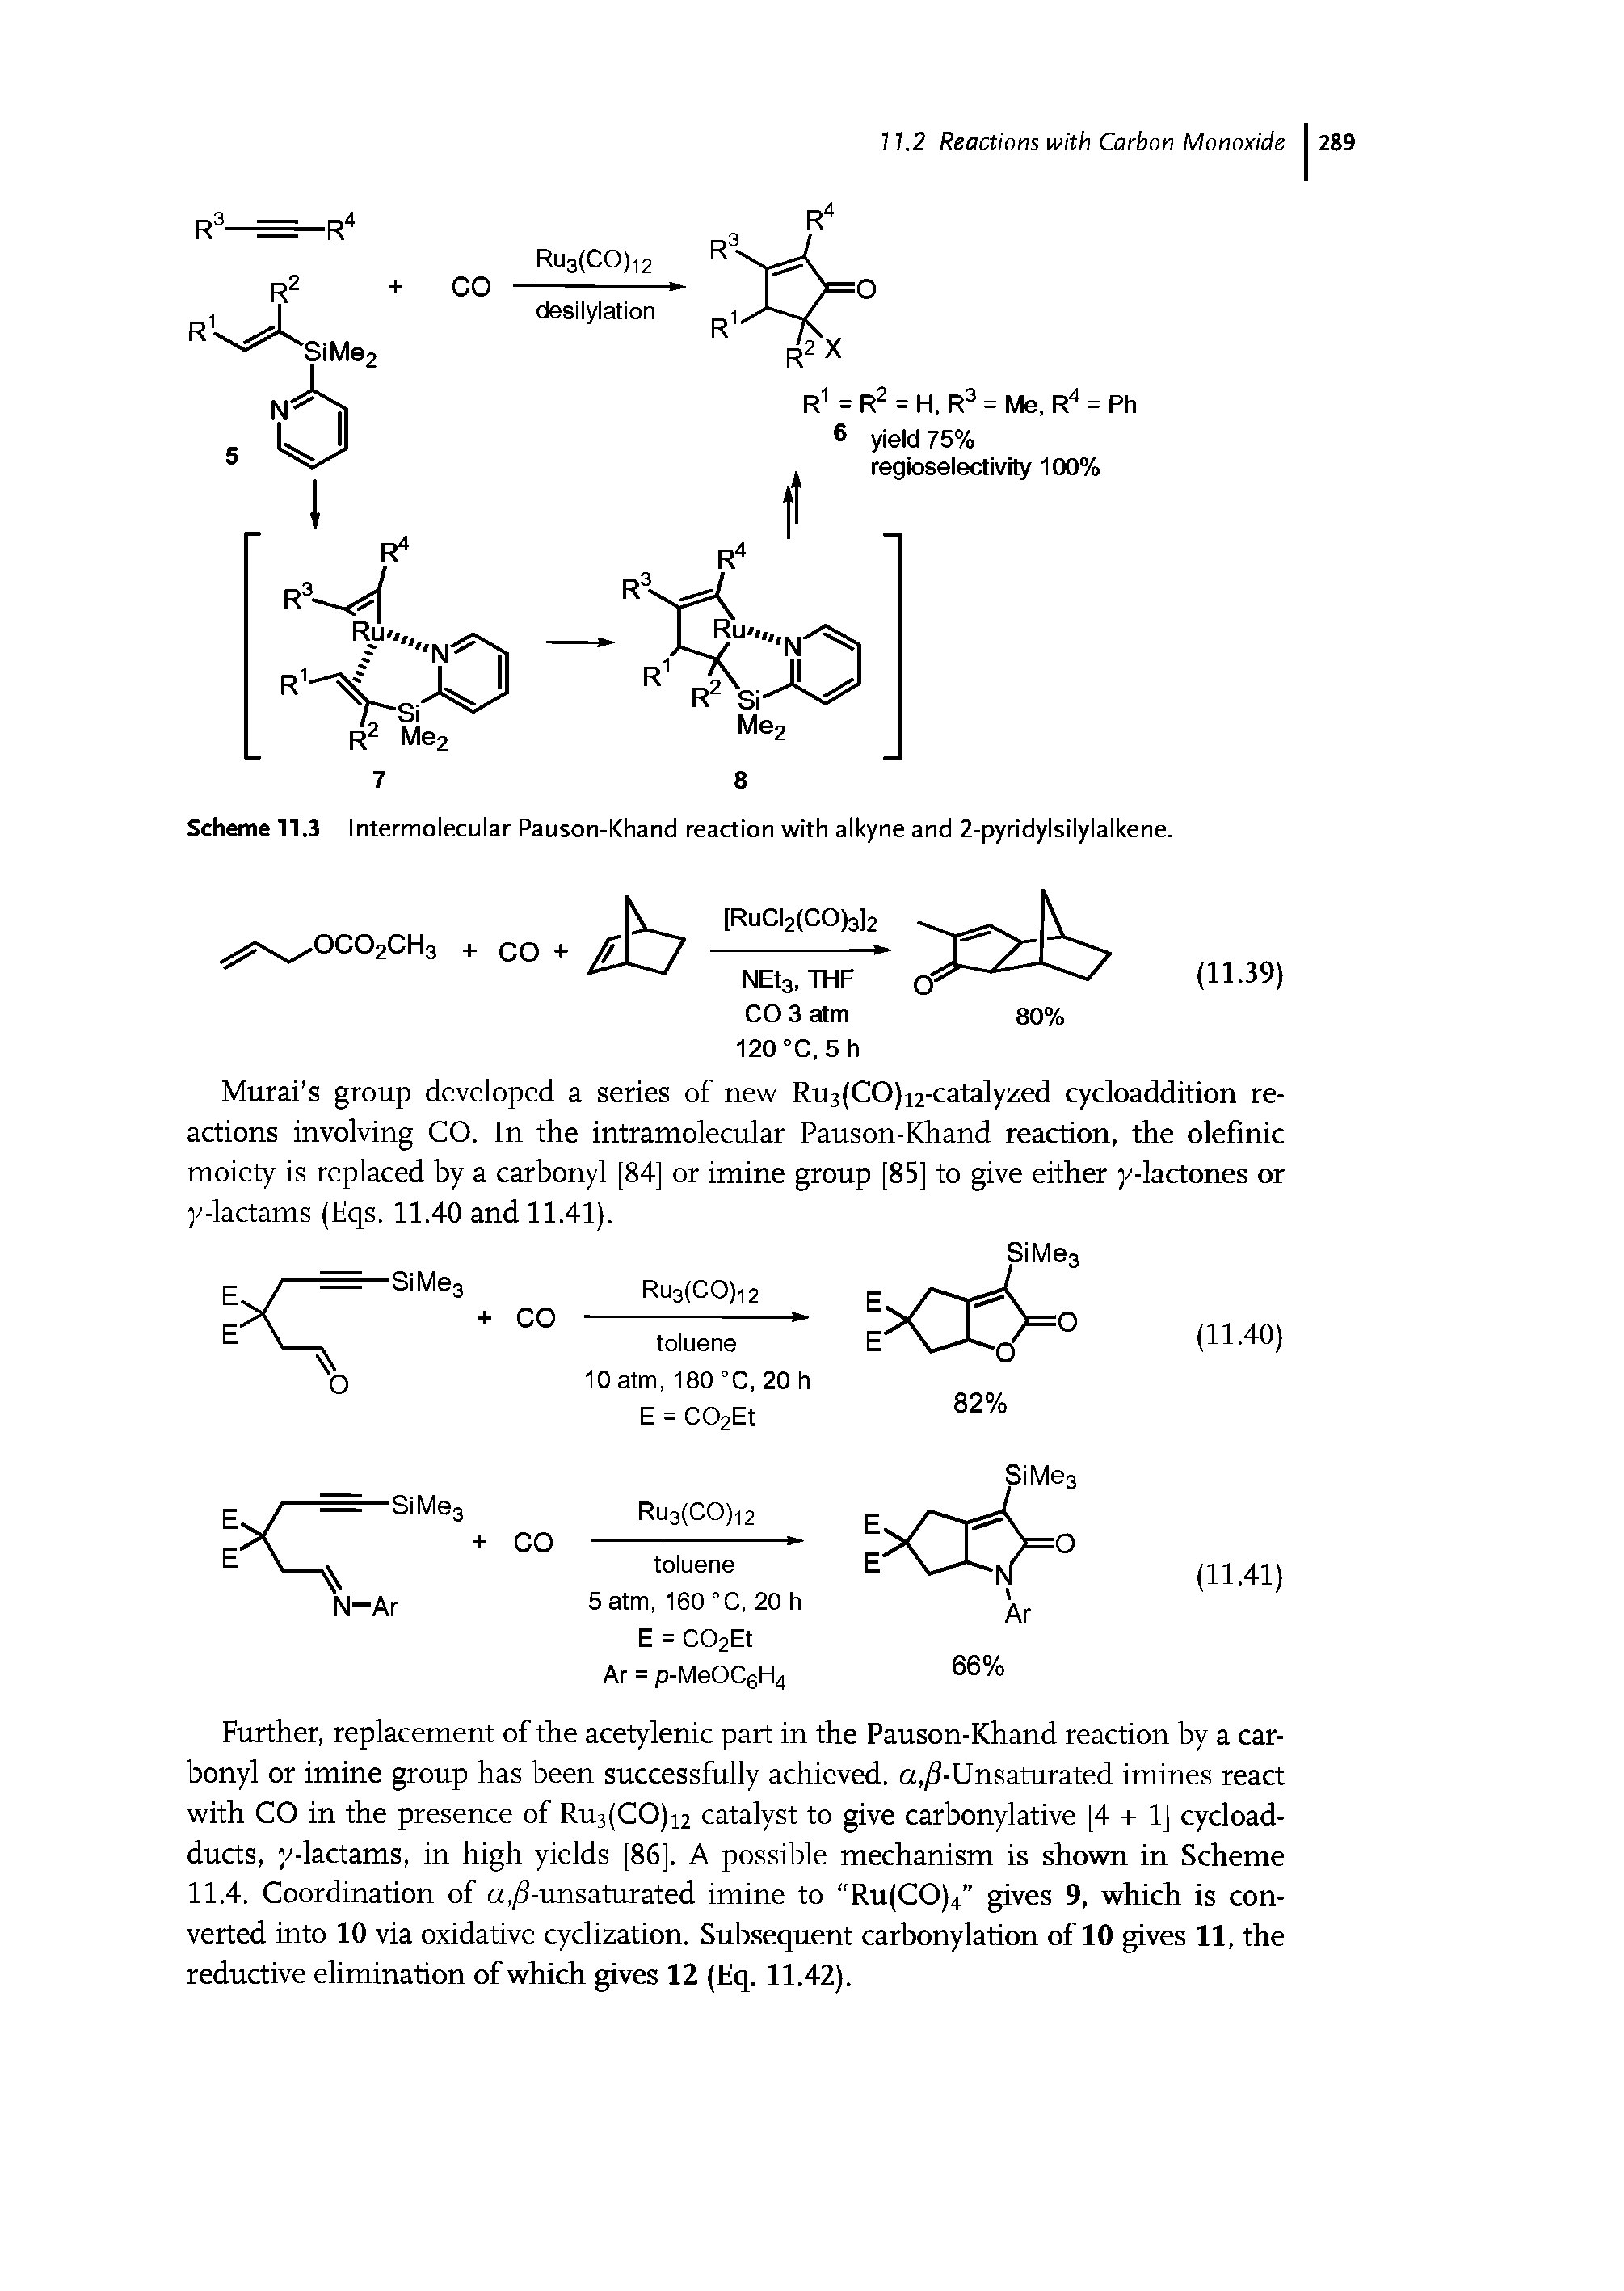 Scheme 11.3 Intermolecular Pauson-Khand reaction with alkyne and 2-pyridylsilylalkene.